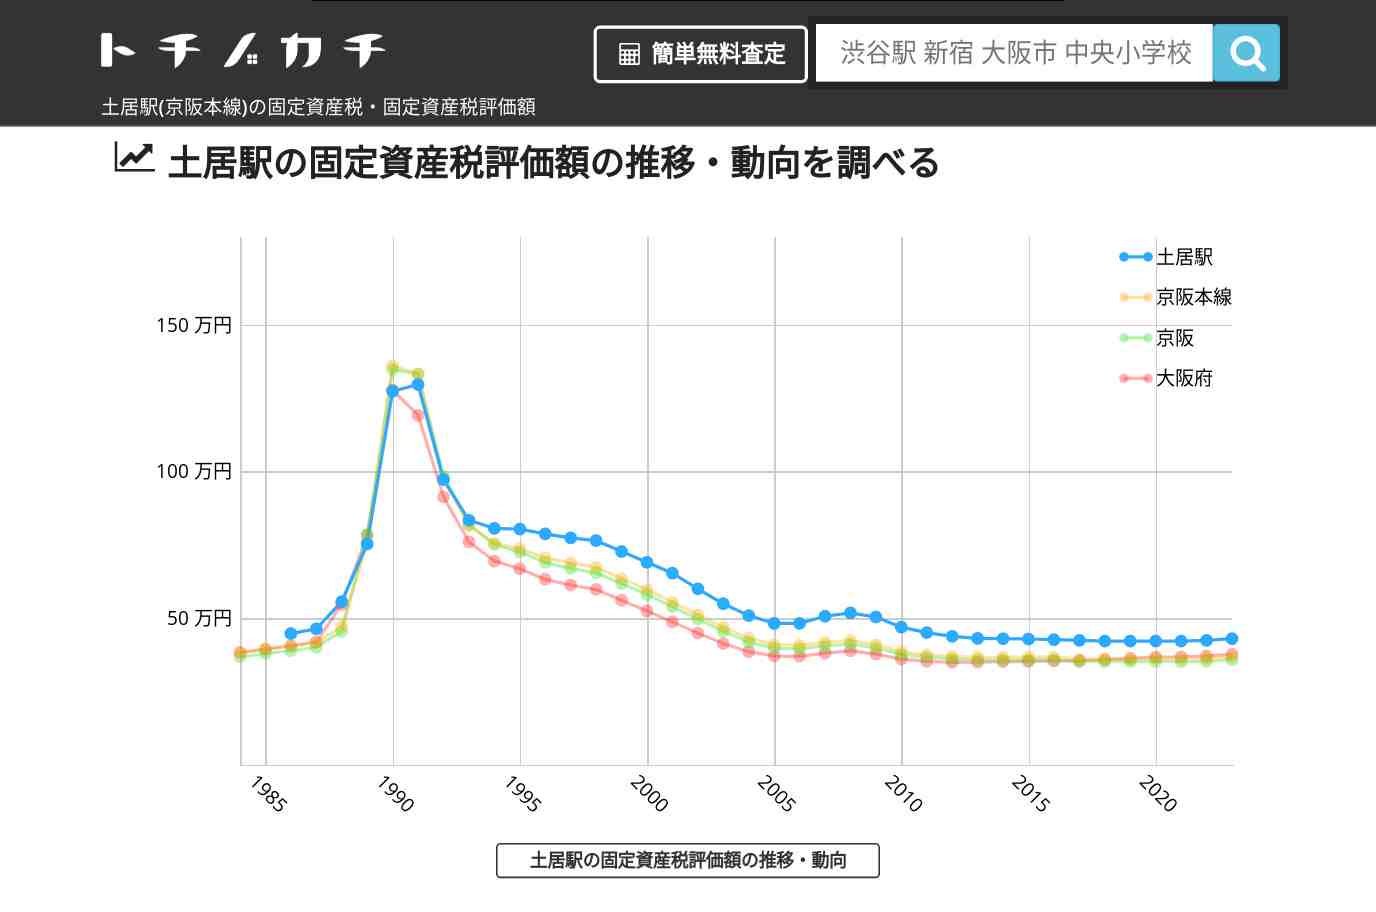 土居駅(京阪本線)の固定資産税・固定資産税評価額 | トチノカチ